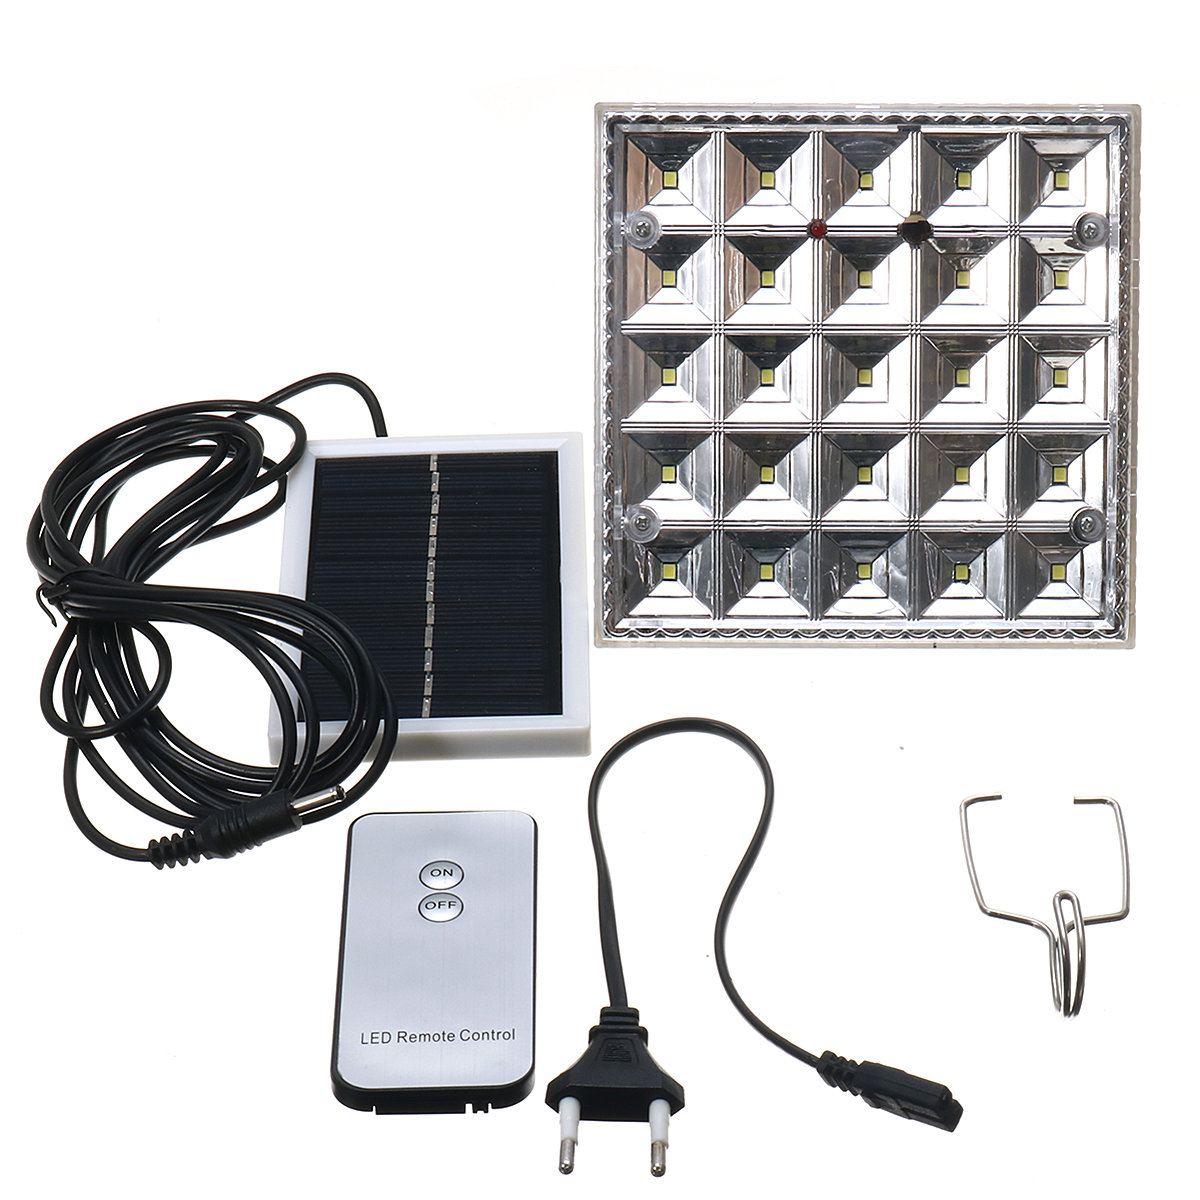 IPRee ™ 25 LED Solar Kampçılık Işık Asma Tente Lamba Fenerli Uzakdan Kumanda